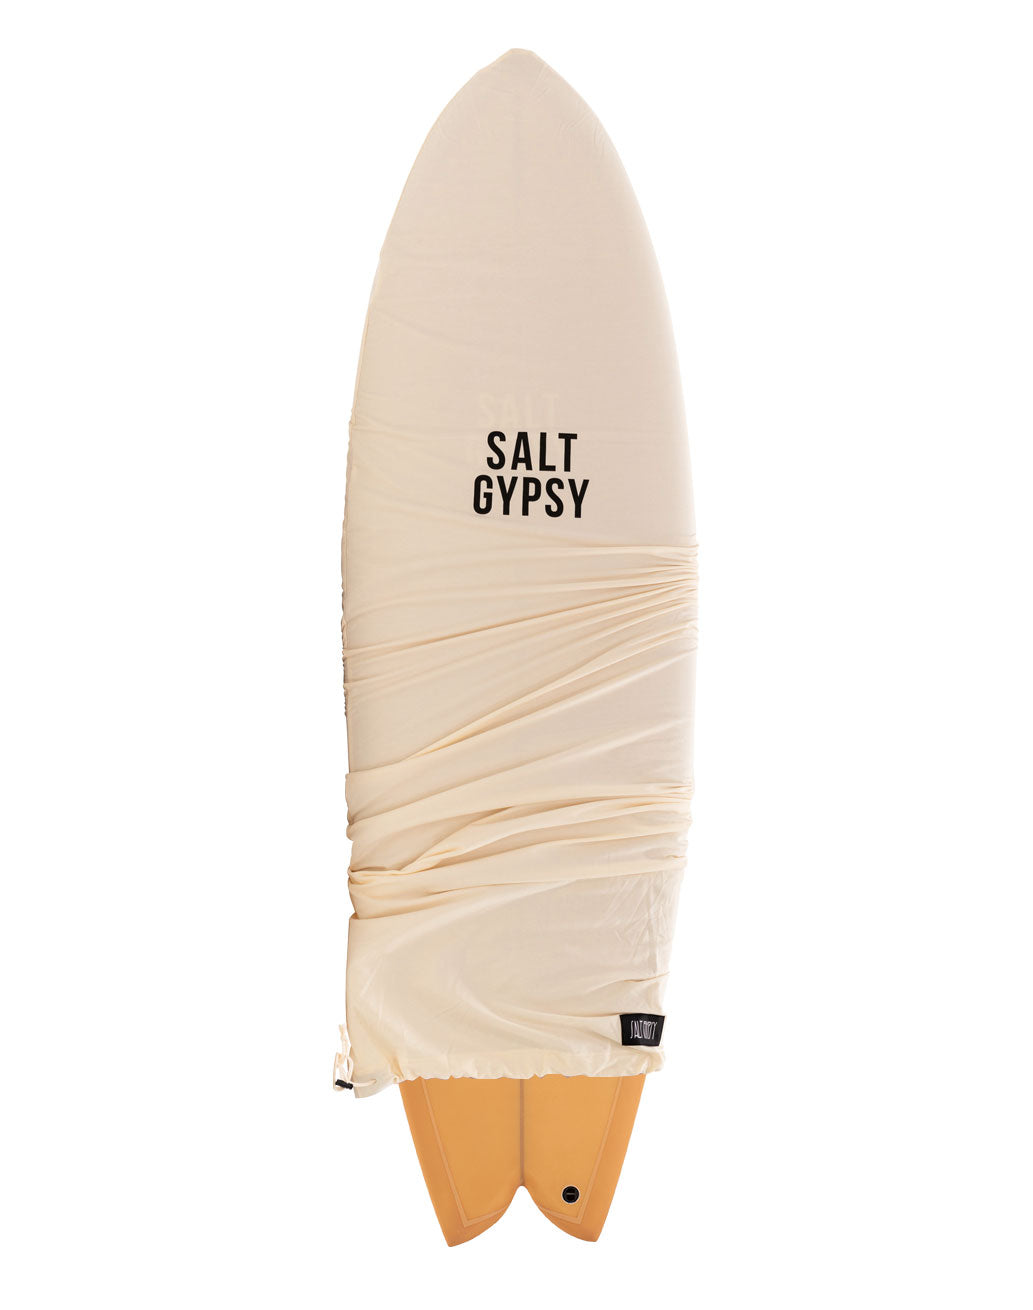 Salt Gypsy Surfboards - Shorebird mustard yellow twin fin surfboard